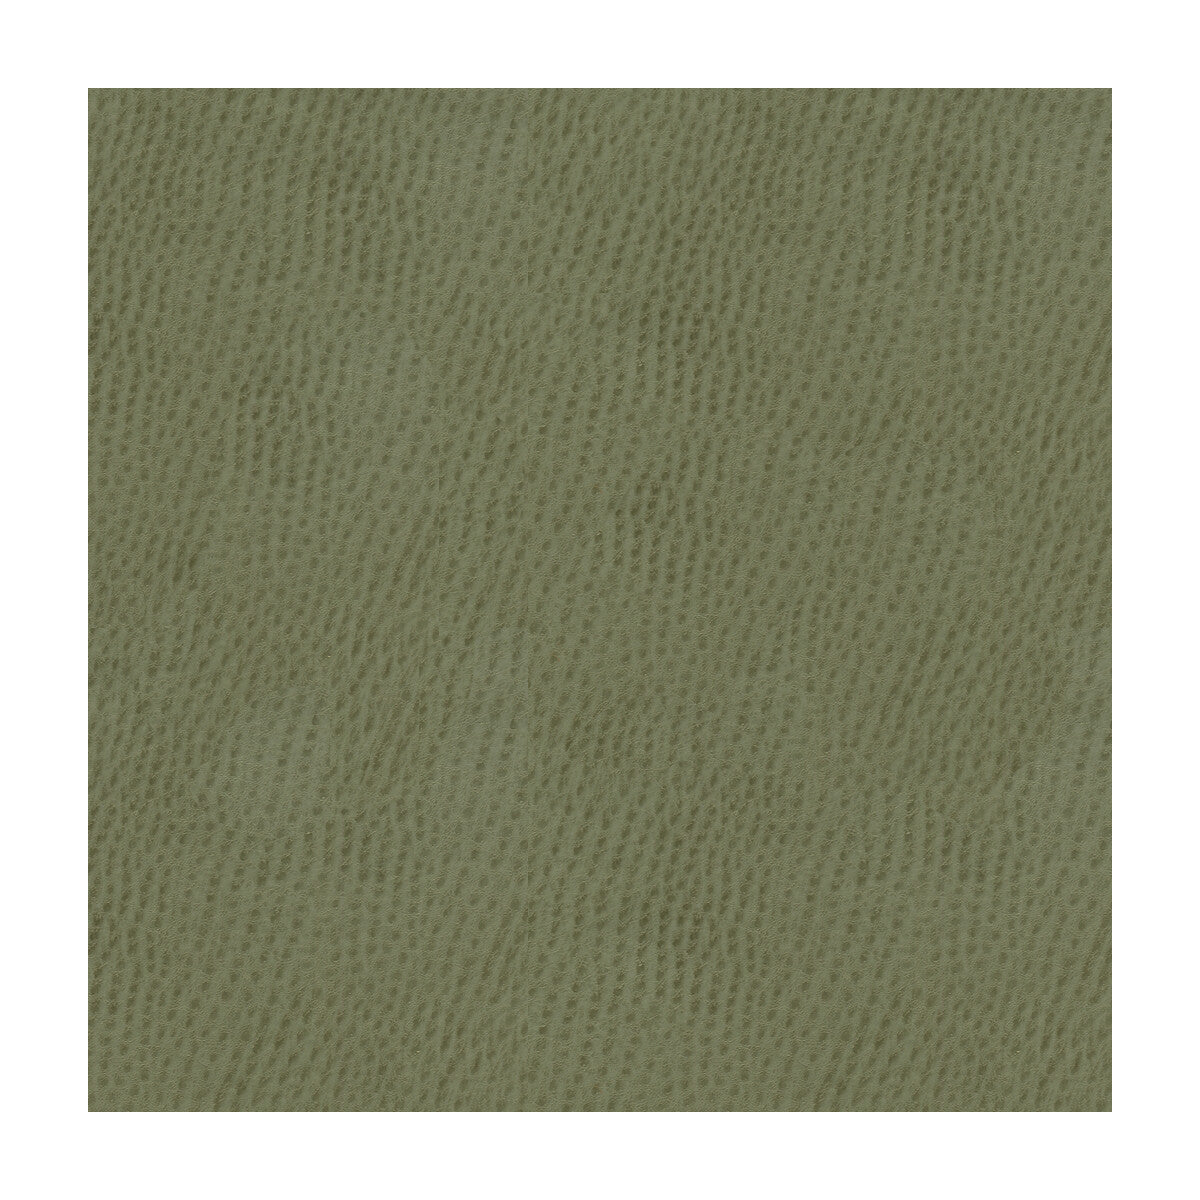 Kravet Contract fabric in belus-11 color - pattern BELUS.11.0 - by Kravet Contract